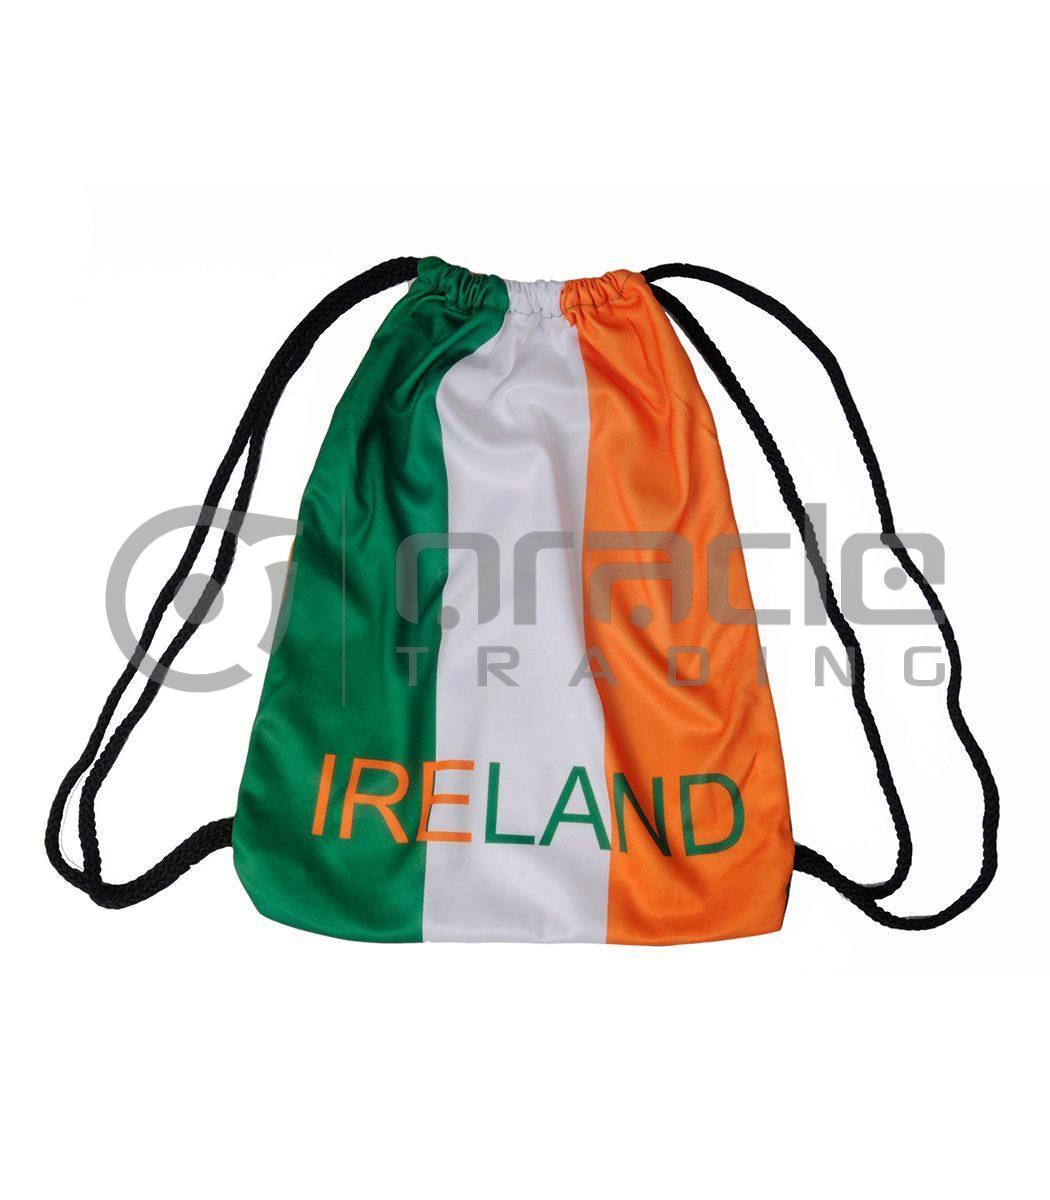 Ireland Gym Bag